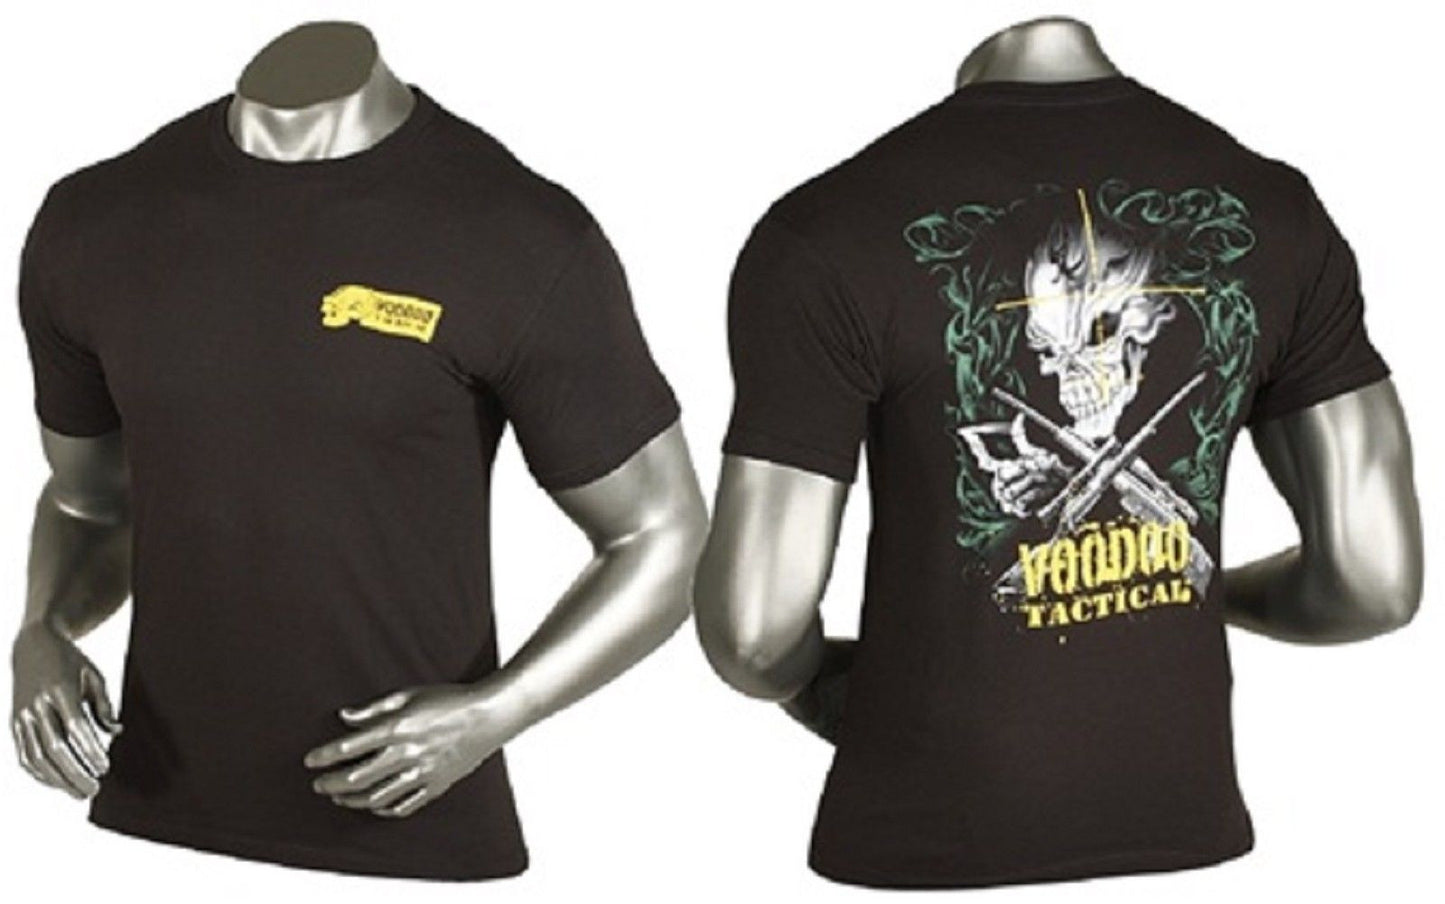 Black Voodoo Tactical Skull T-Shirt - Men's Skeleton Graphic Tee Shirt